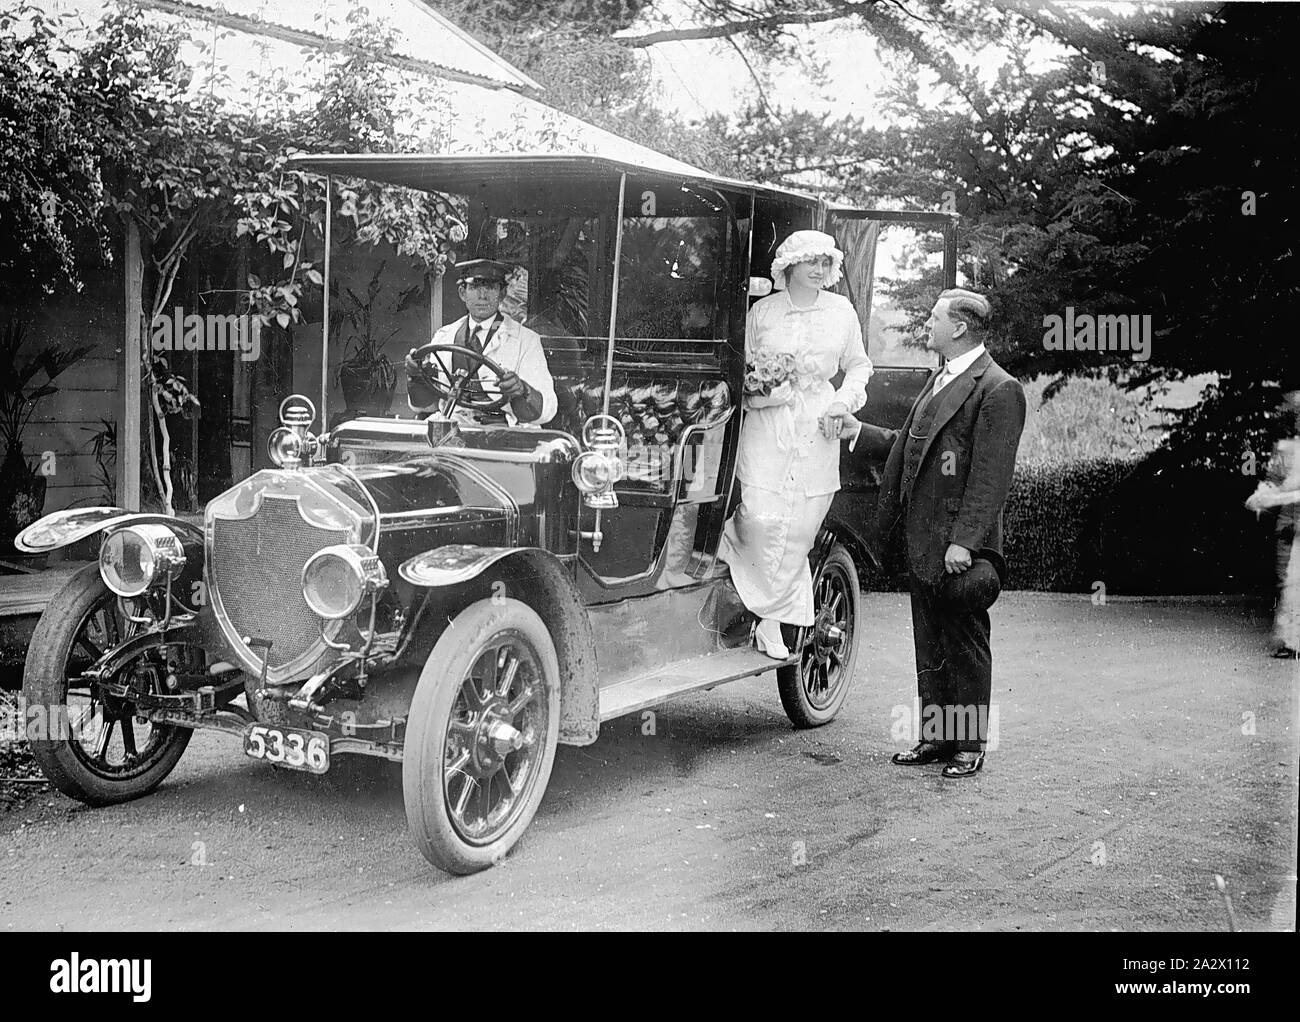 https://c8.alamy.com/comp/2A2X112/negative-axedale-victoria-1908-a-bride-alighting-from-a-chauffeur-driven-car-2A2X112.jpg